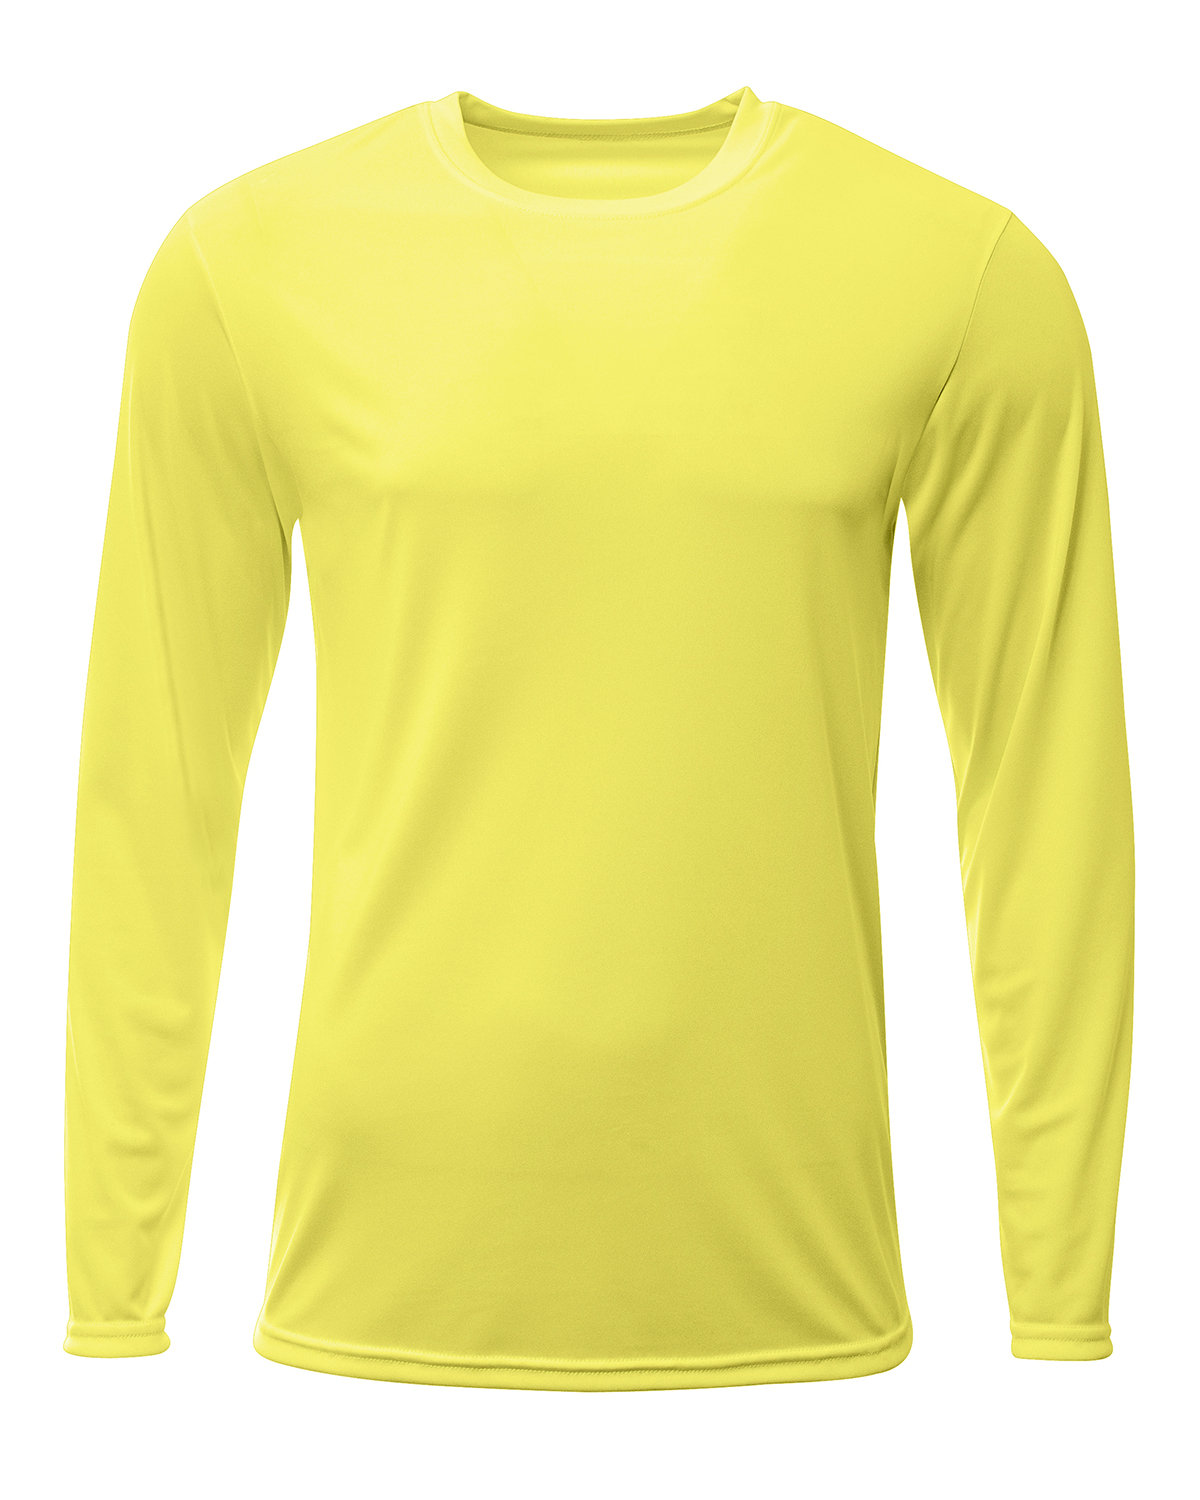 A4 Men's Sprint Long Sleeve T-Shirt SAFETY YELLOW 